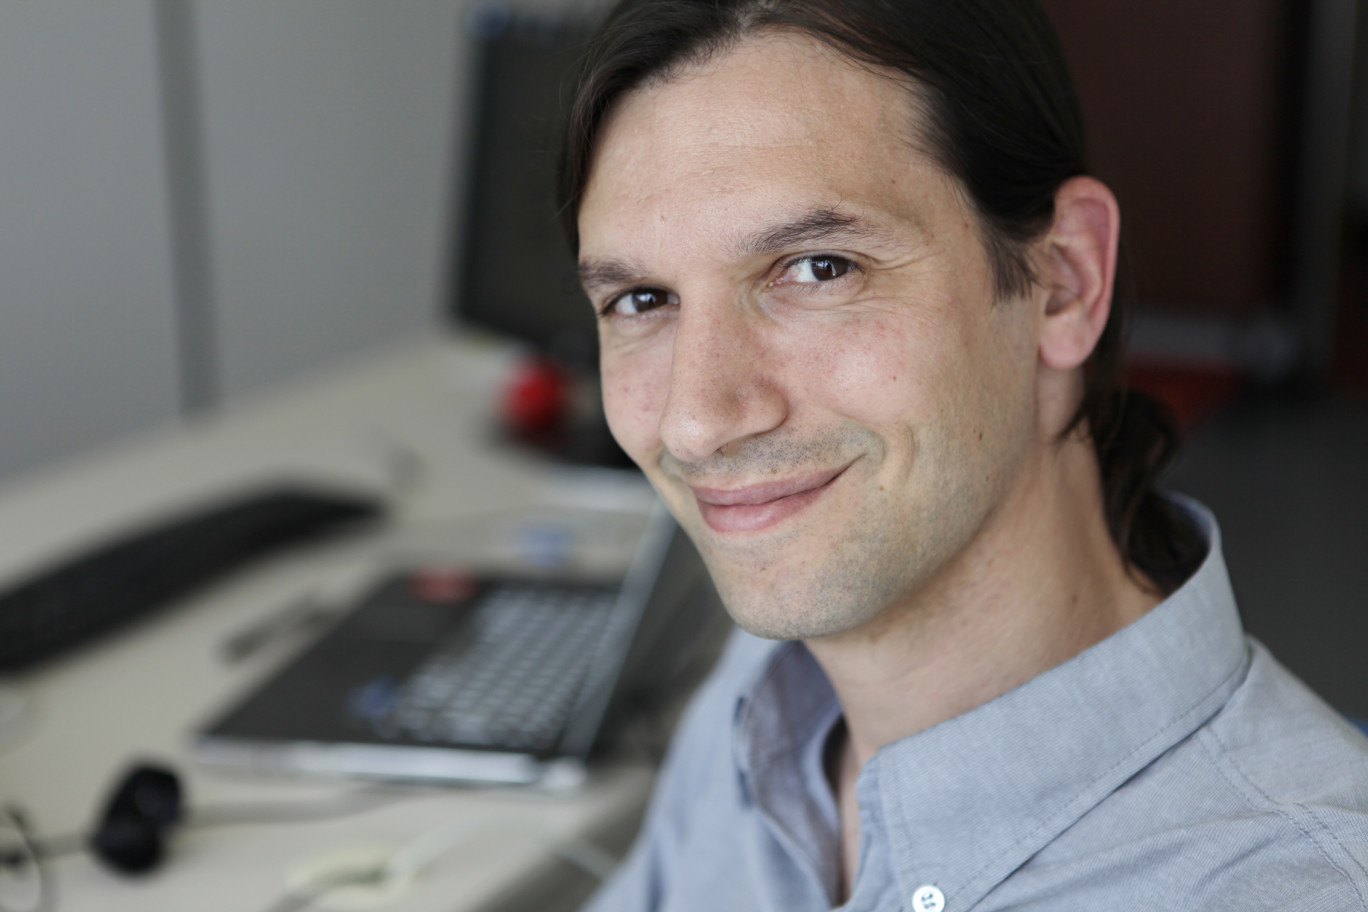 Andres Lartigue-Debian, directeur de BINOVA, met en place des logiciels de gestion sur mesure.